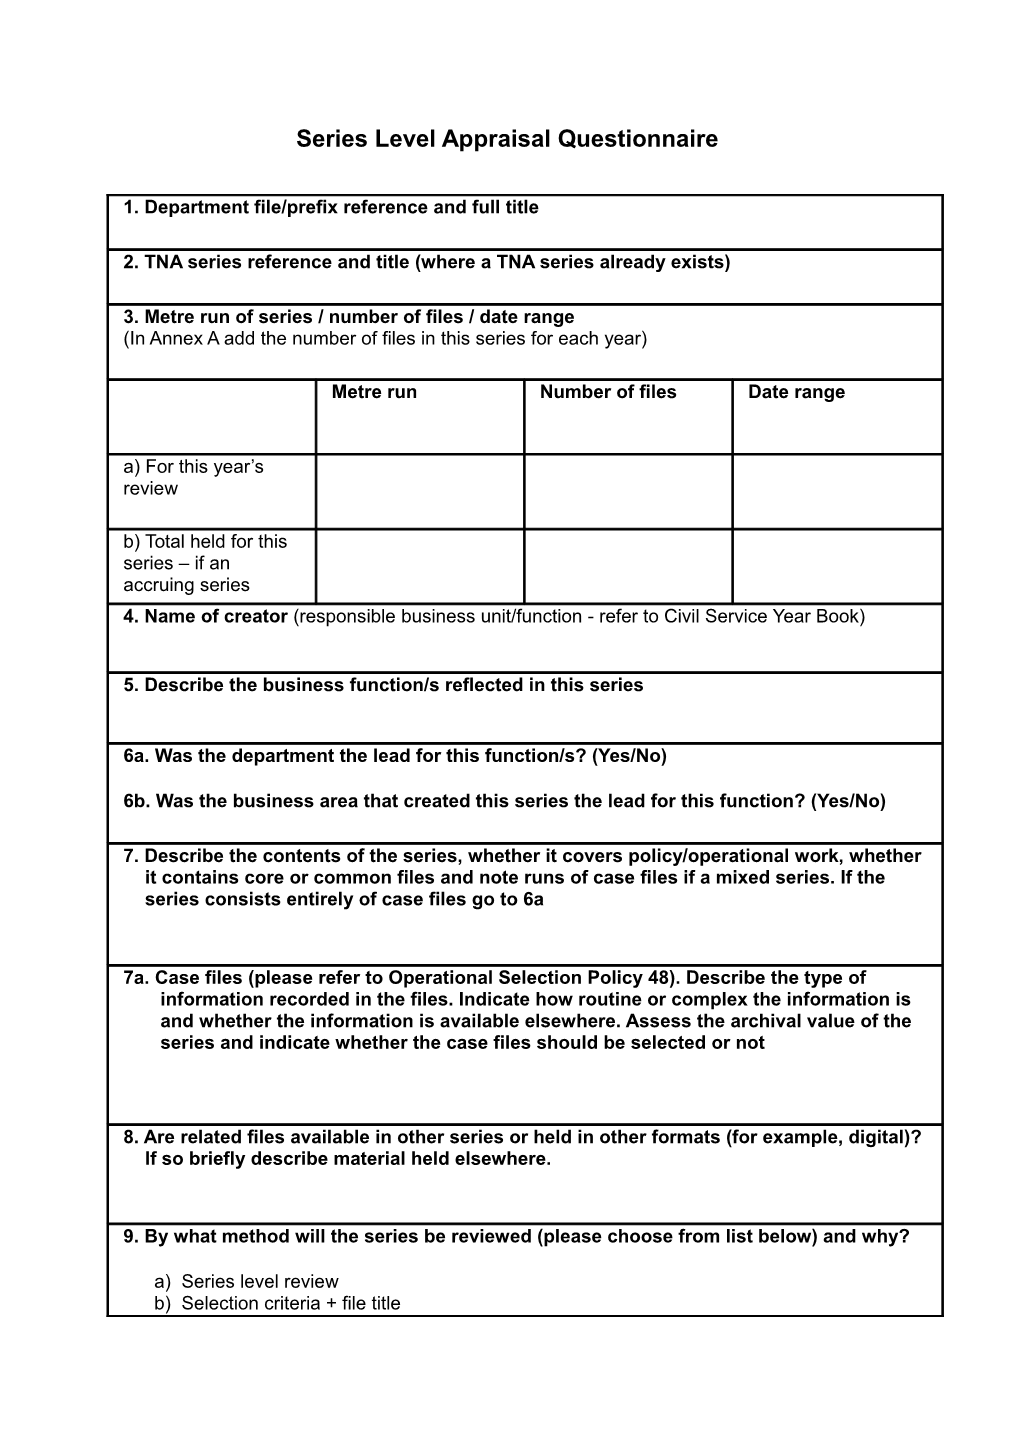 Series Level Appraisal Questionnaire